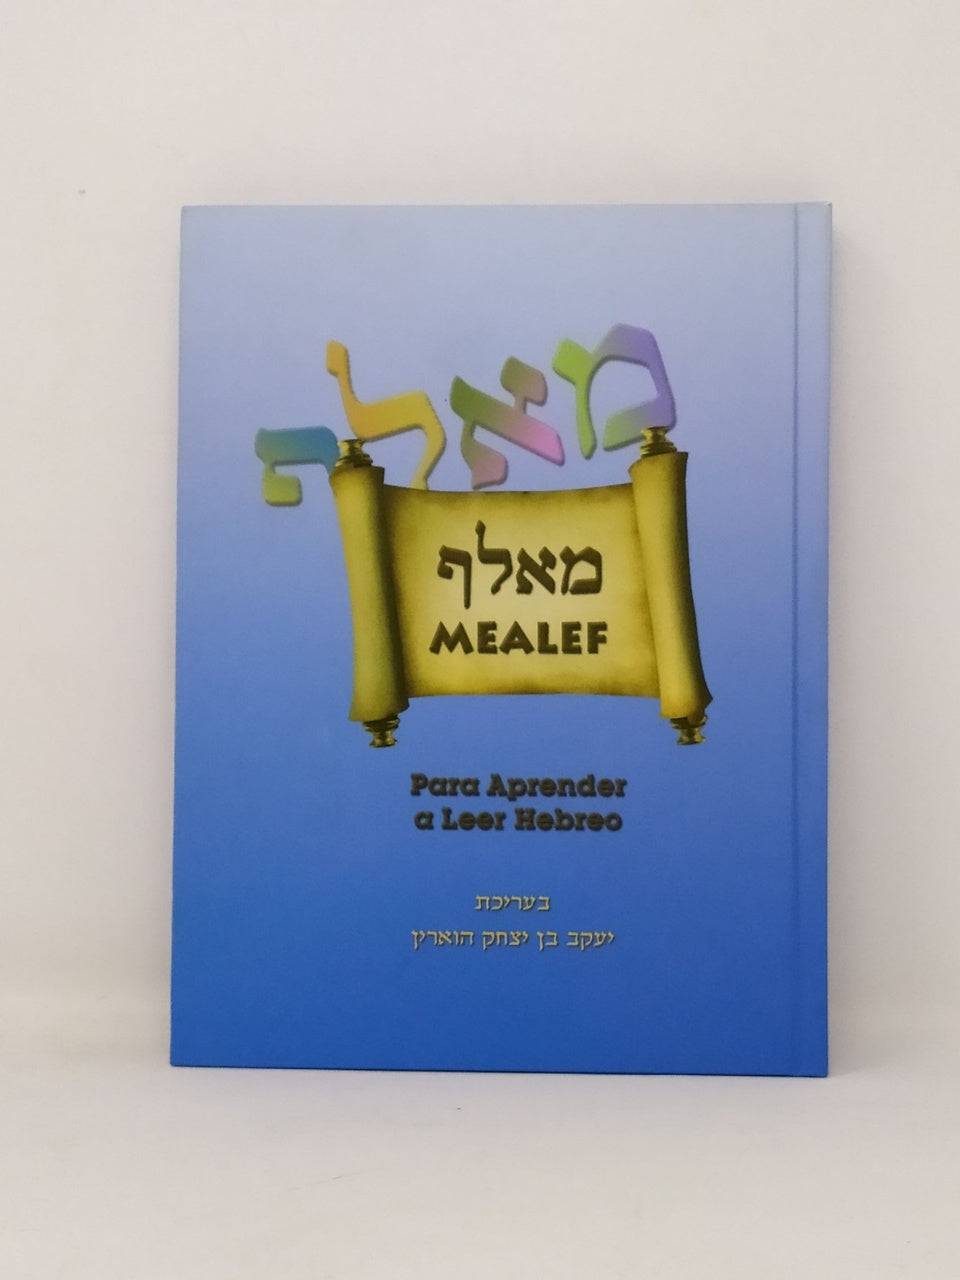 Mealef - Libreria Jerusalem Centro